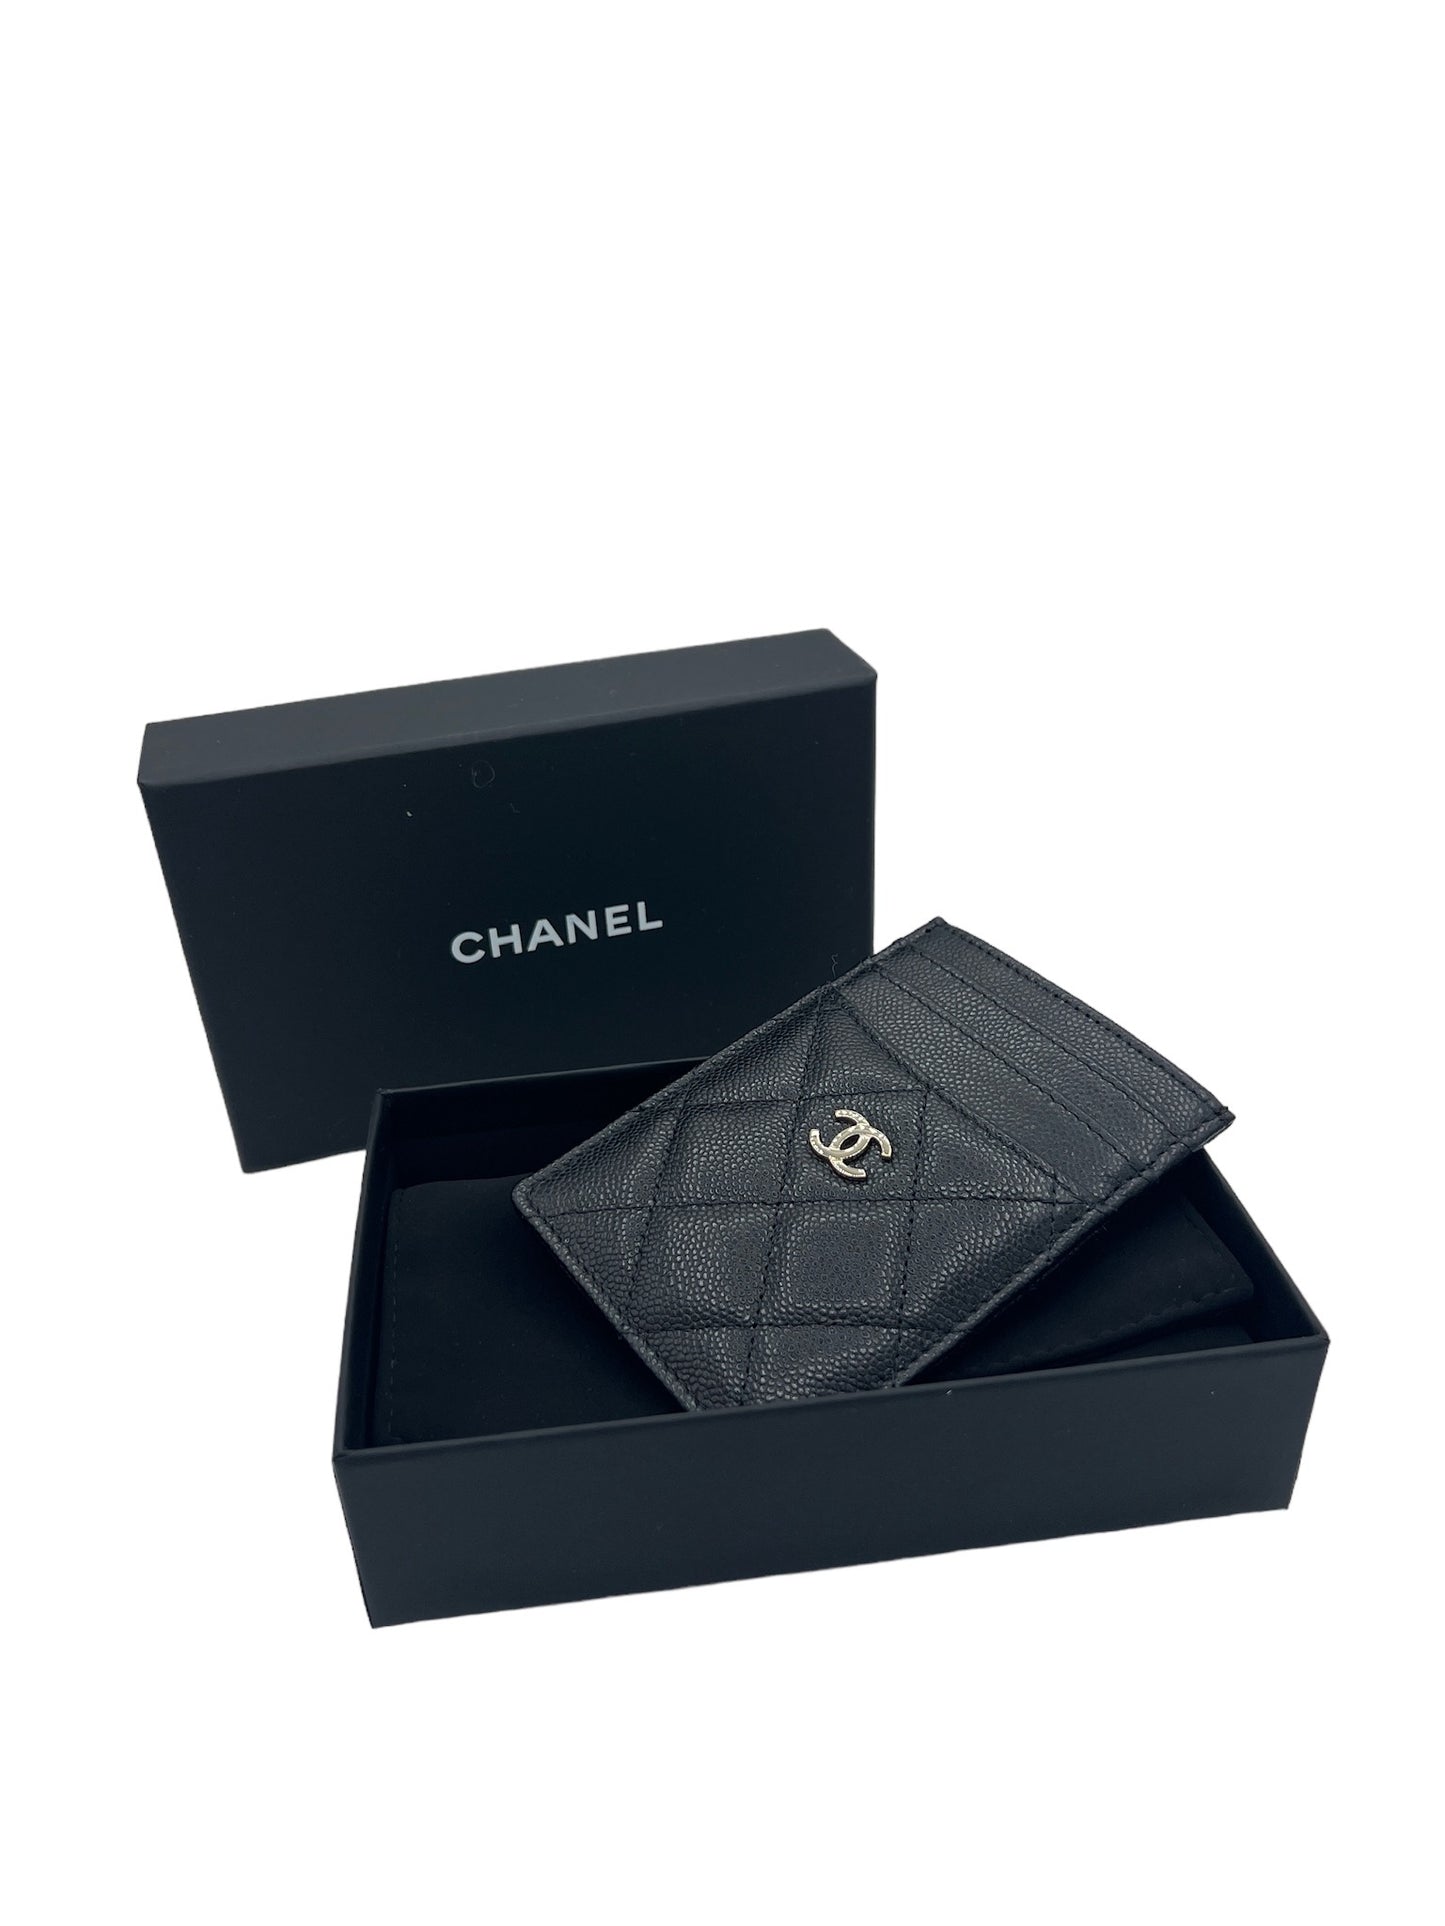 CHANEL - Black Caviar Skin Card Holder